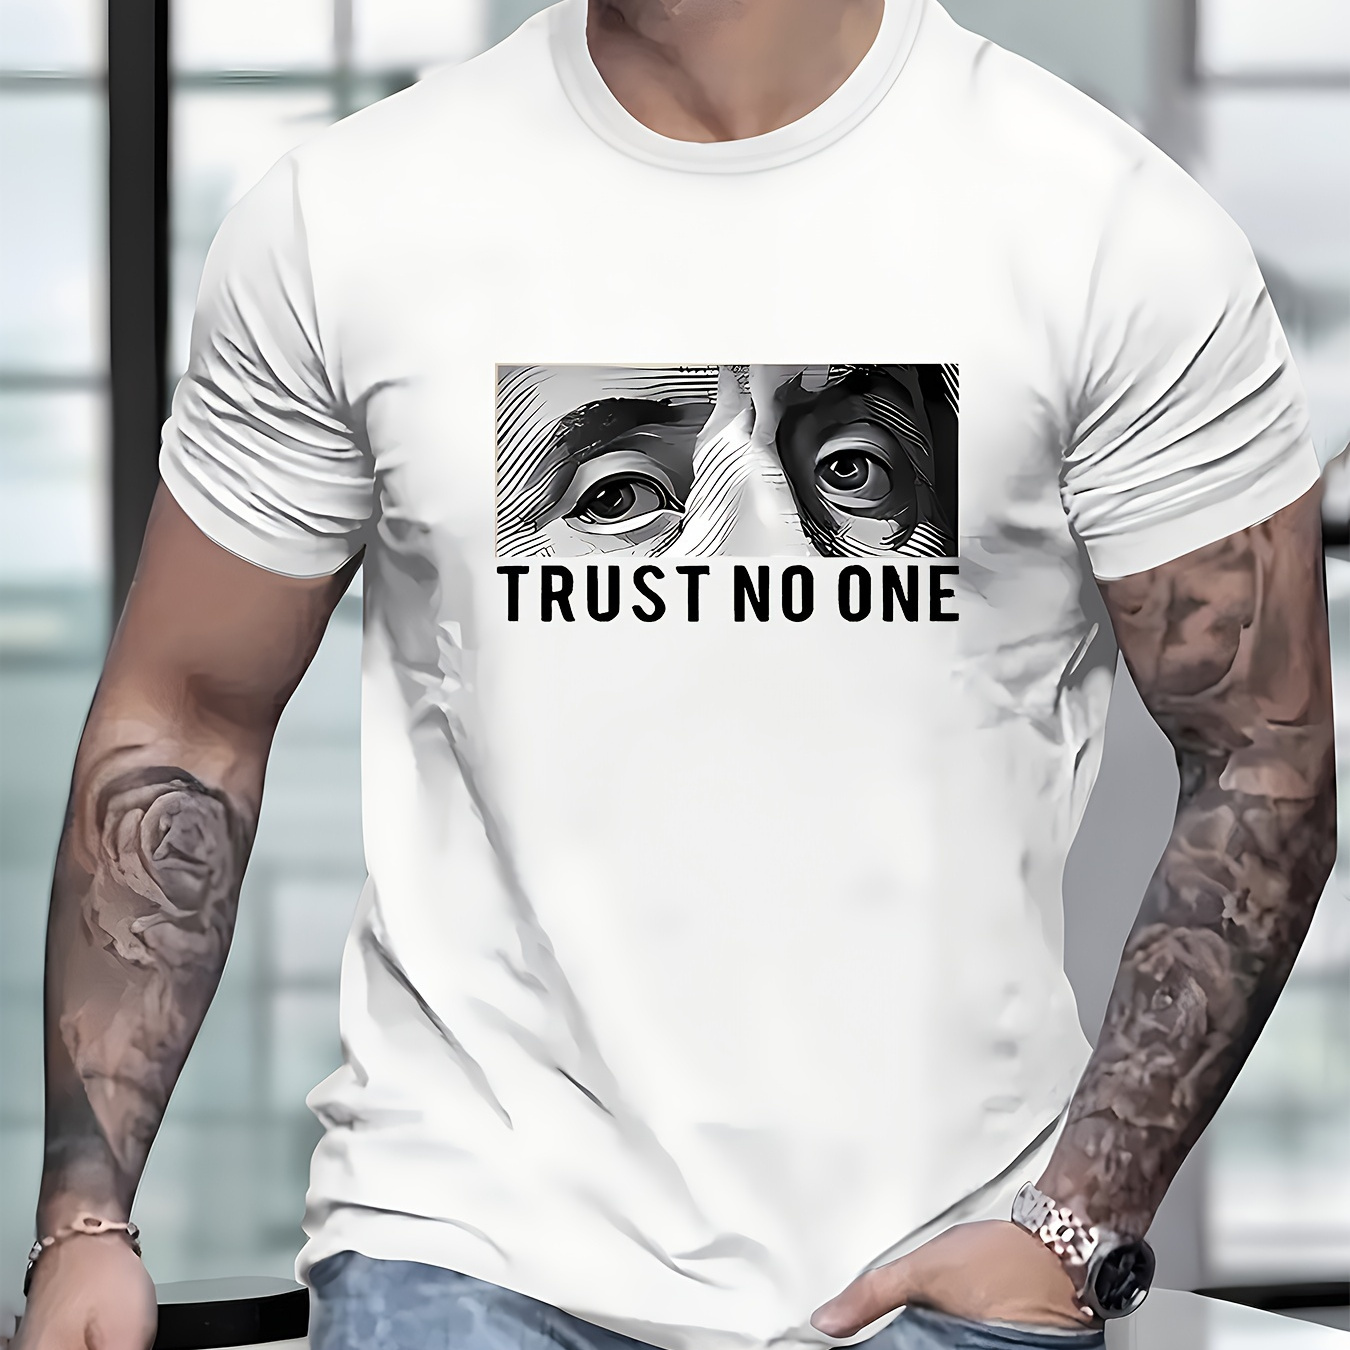 

Trust No 1 Print T Shirt, Tees For Men, Casual Short Sleeve T-shirt For Summer